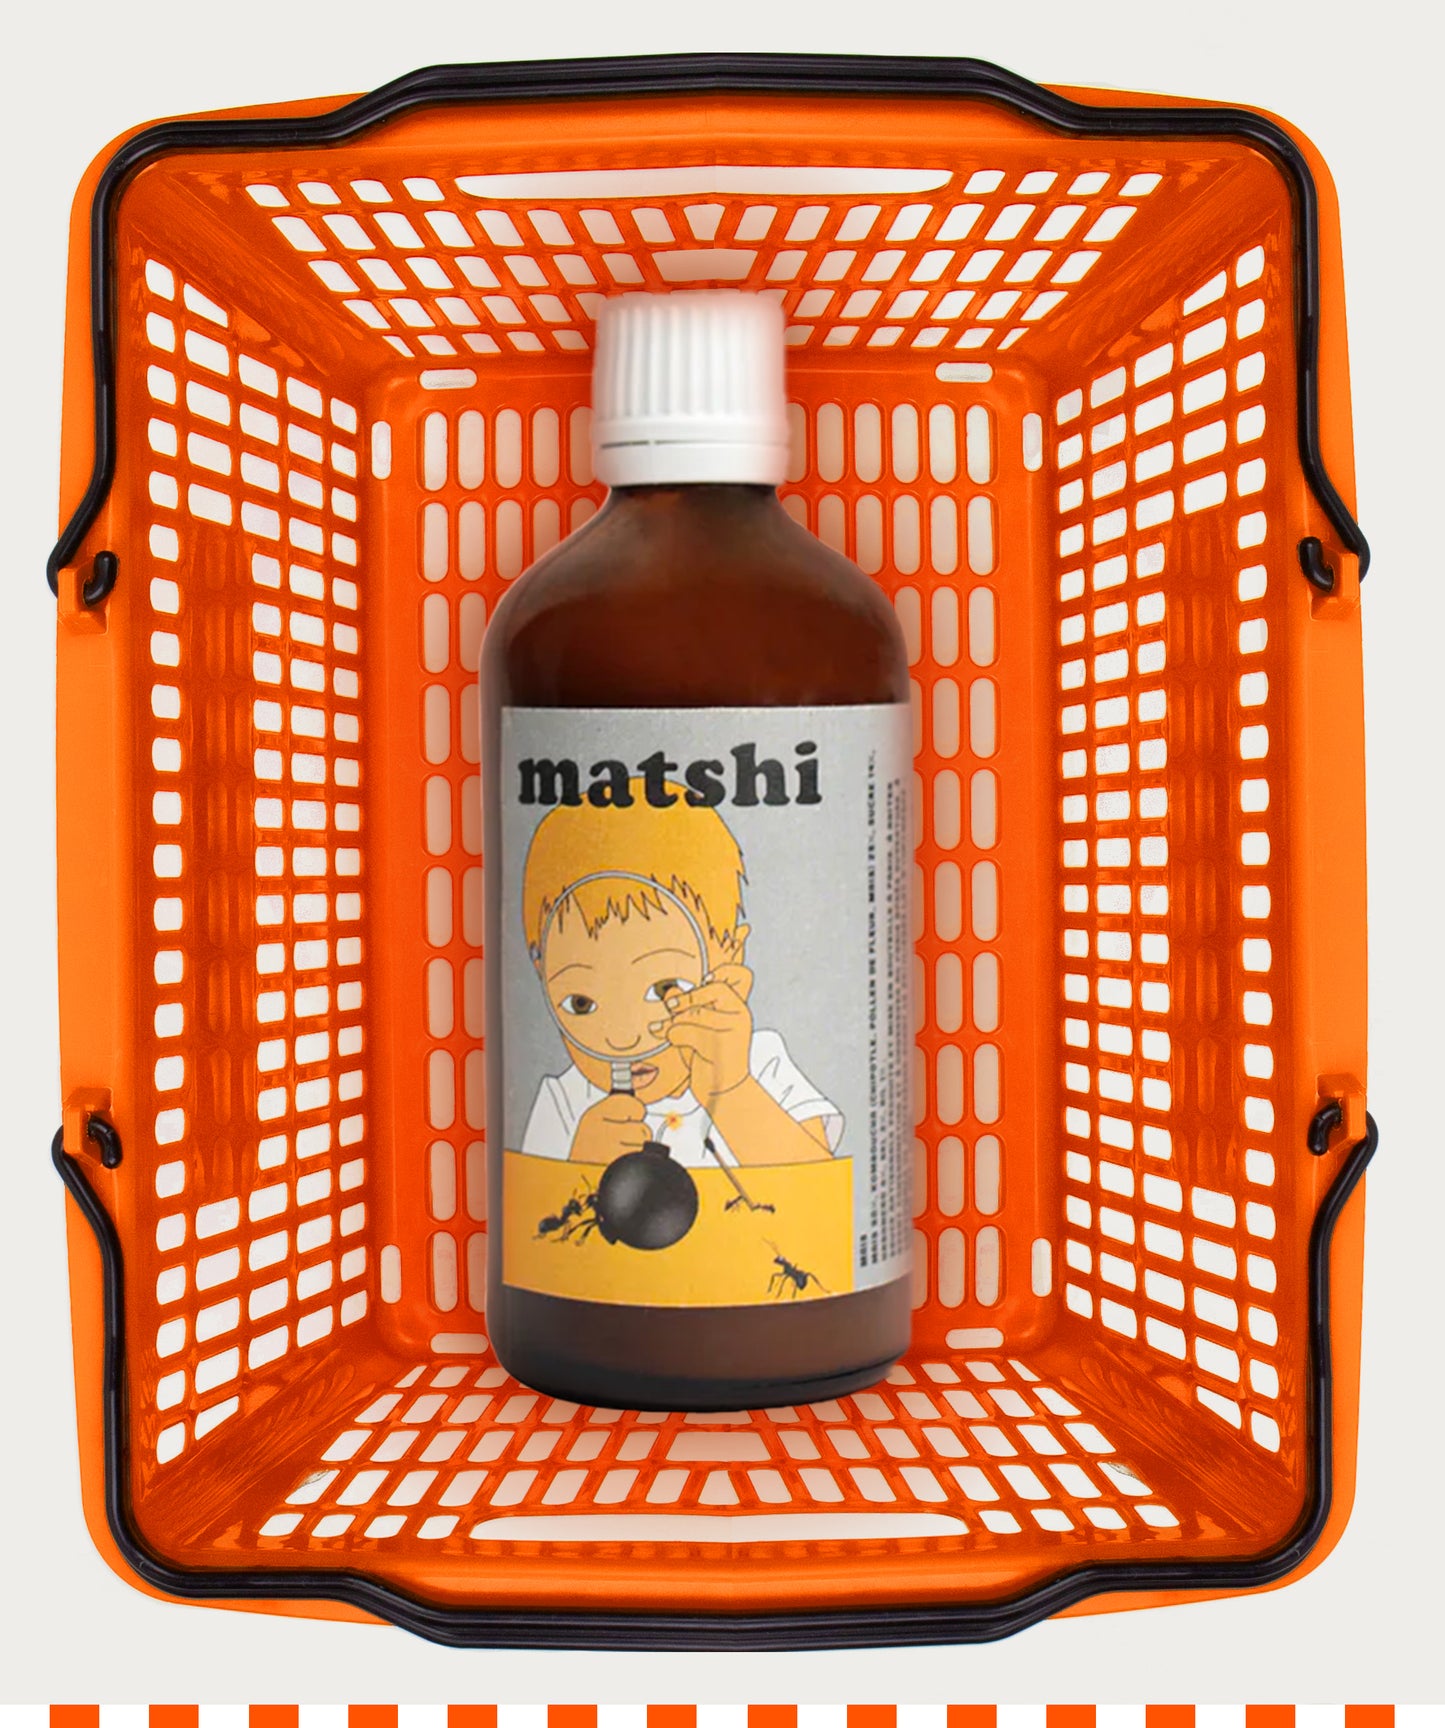 Sauce Matshi Maïs 100ml